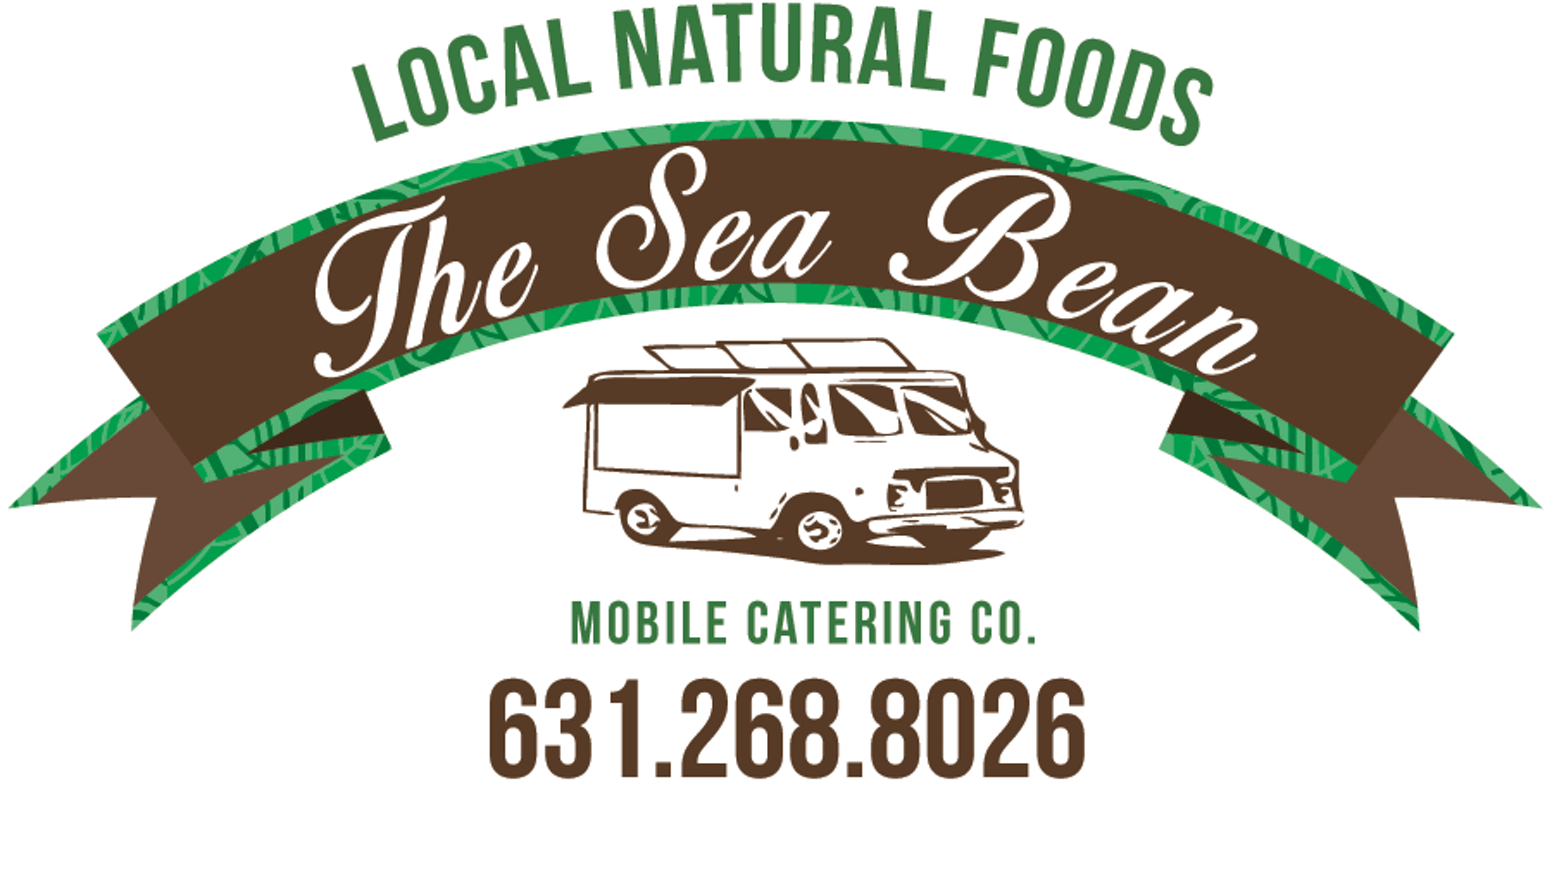 FoodsCo Logo - The Sea Bean Natural Foods Co.